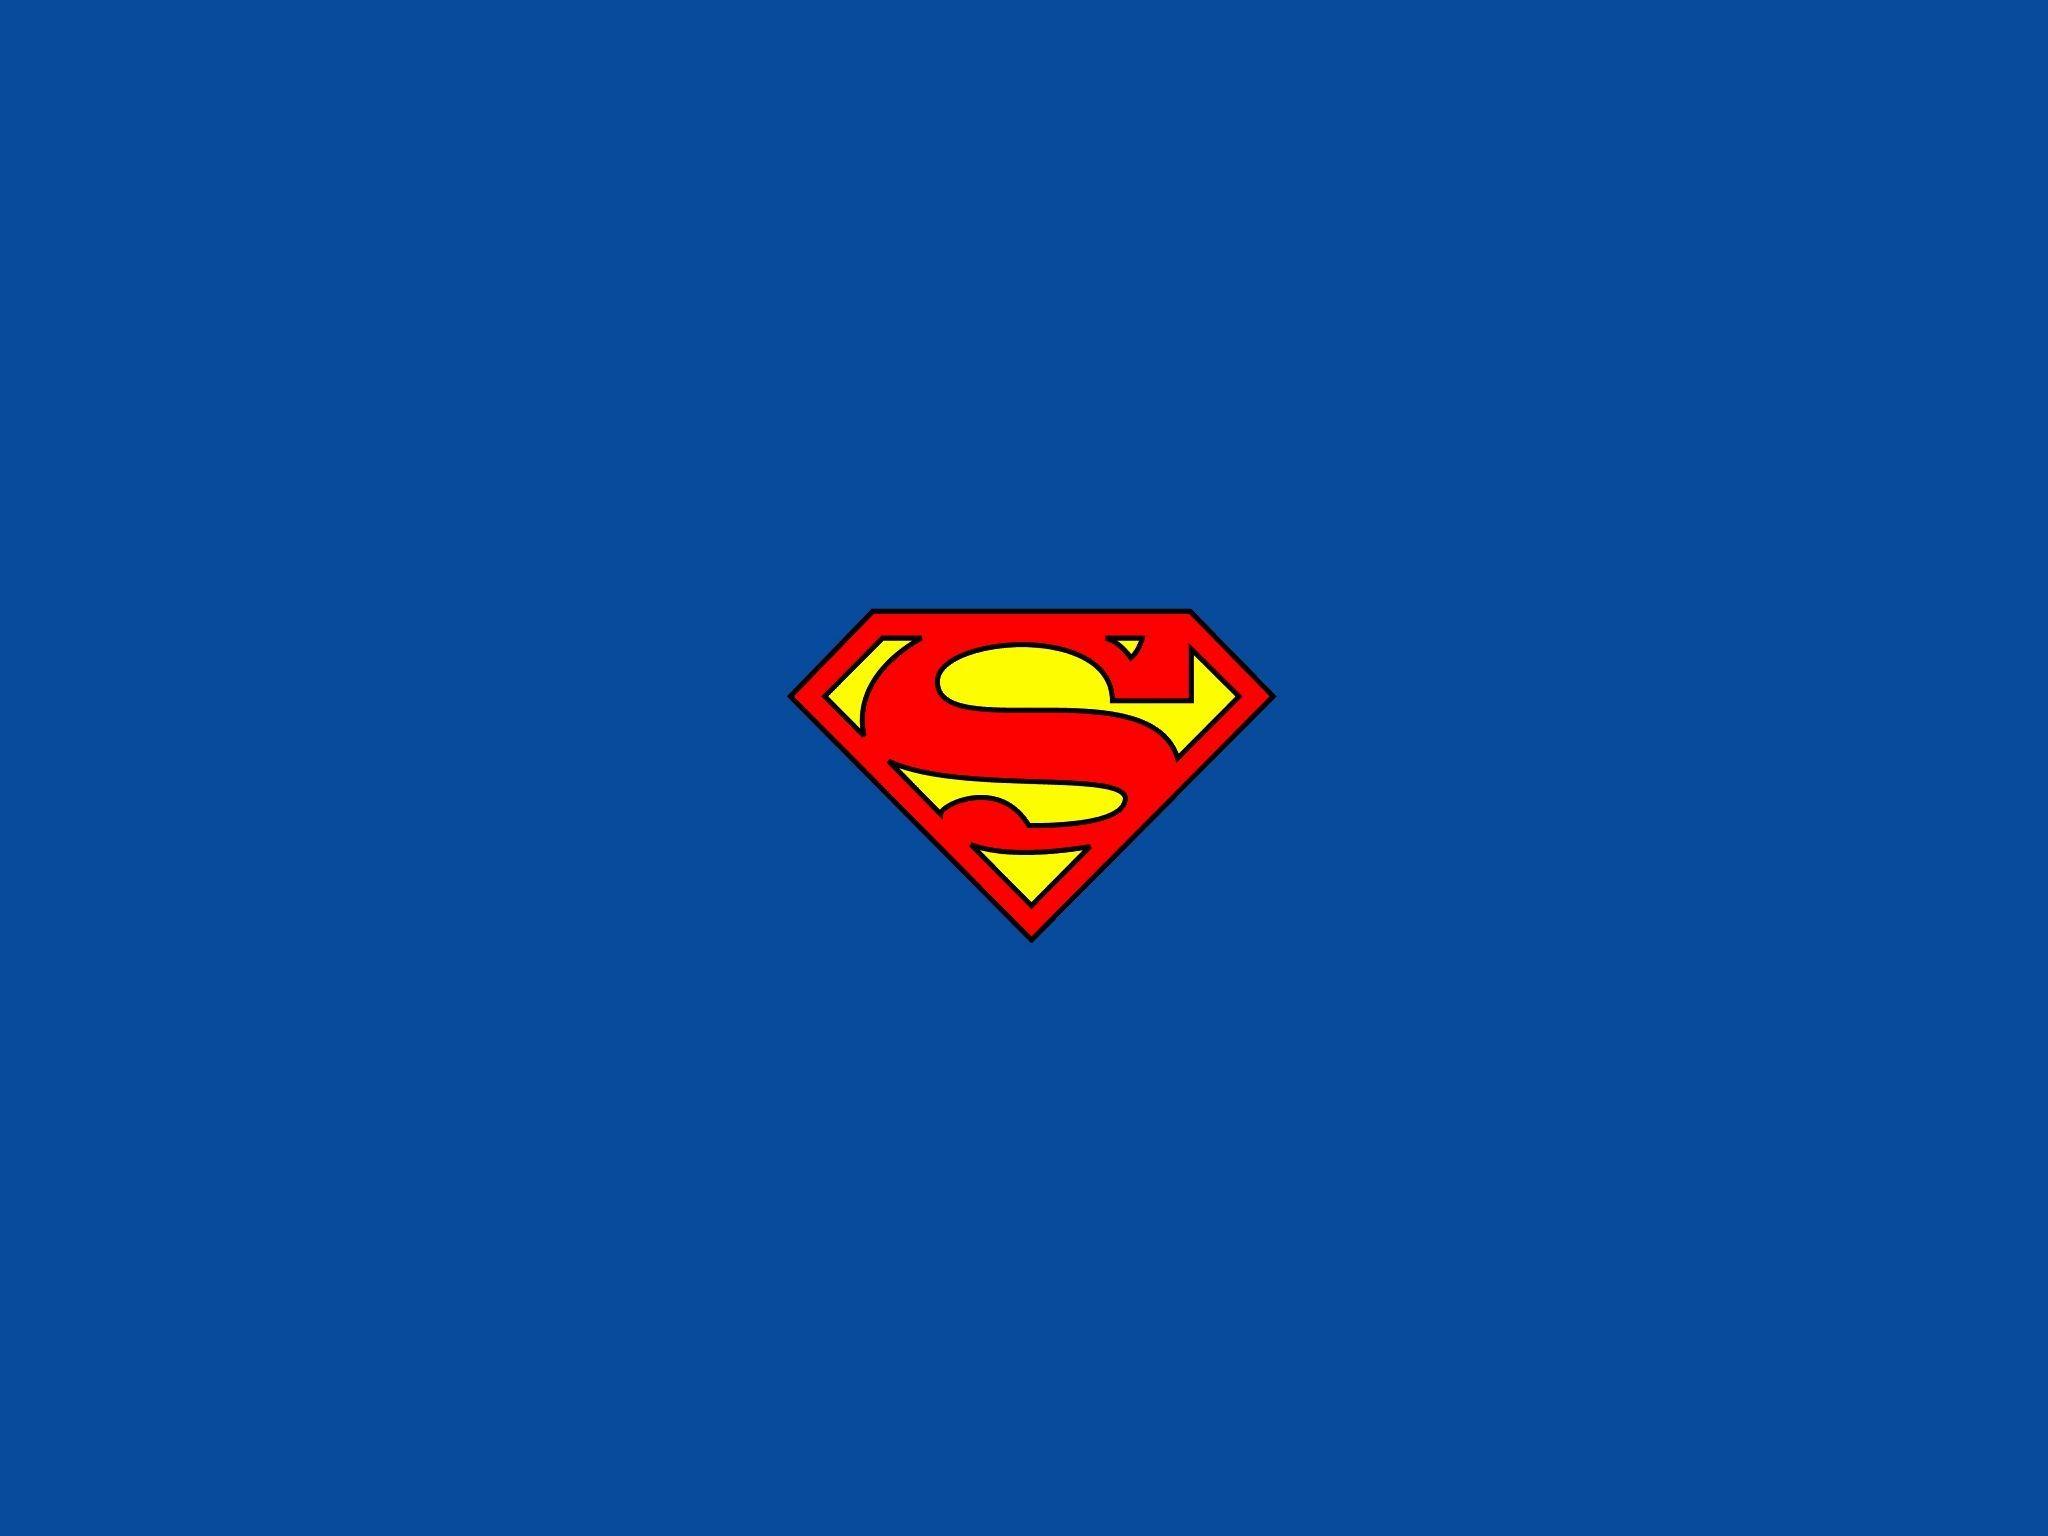 Superman iPad Wallpapers - Top Free Superman iPad Backgrounds ...